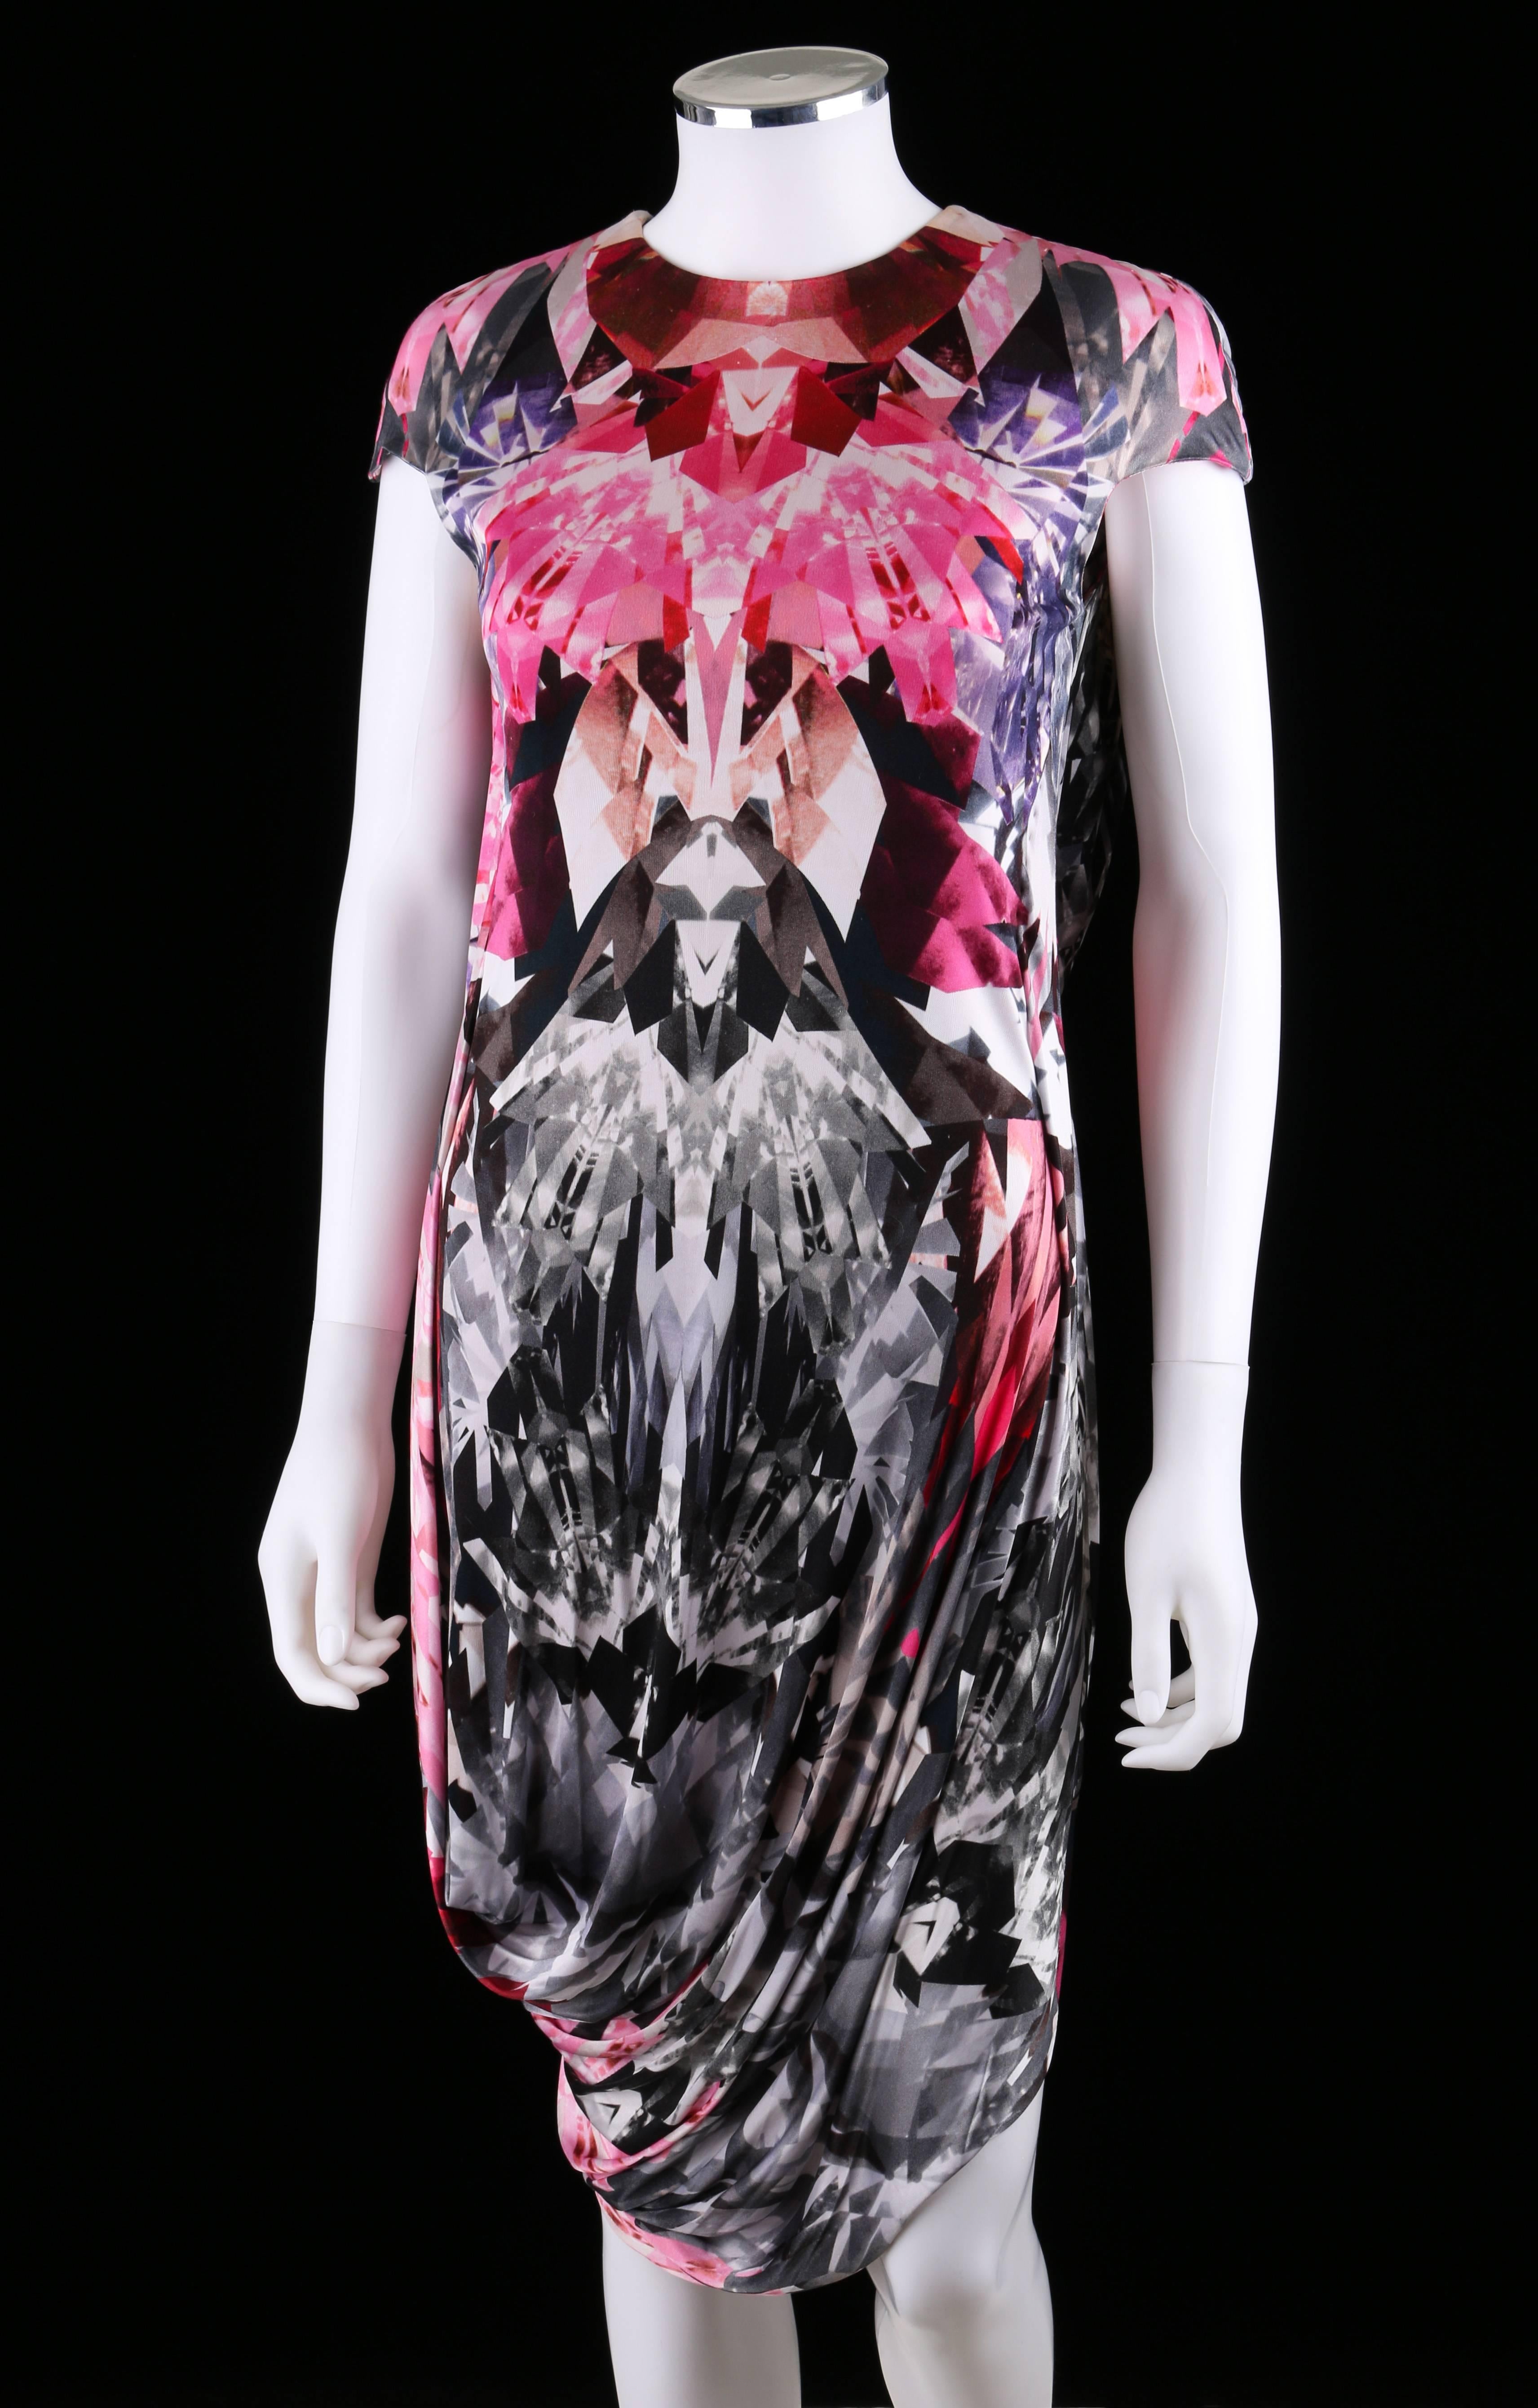 Women's ALEXANDER McQUEEN  S/S 2009 Iconic Crystal Kaleidoscope Print Dress Size 42